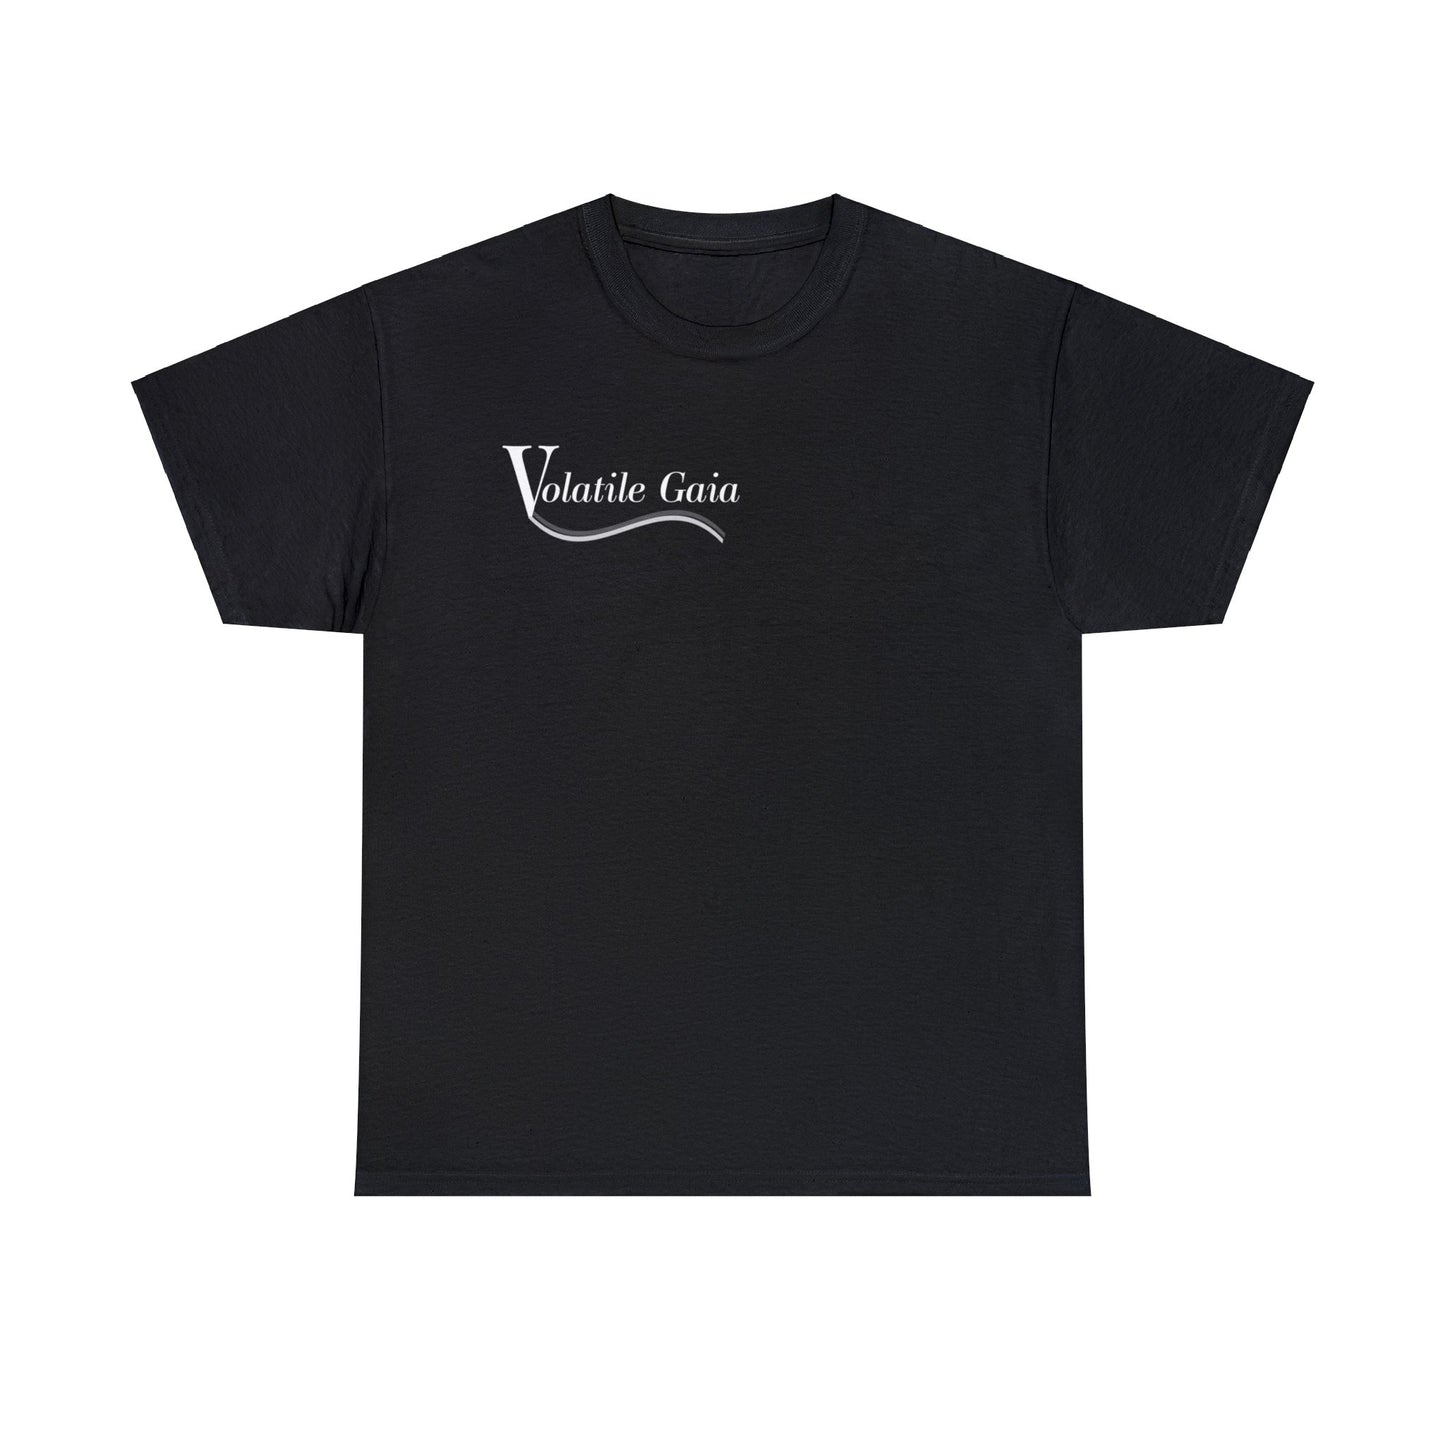 Volatile Gaia Shirt